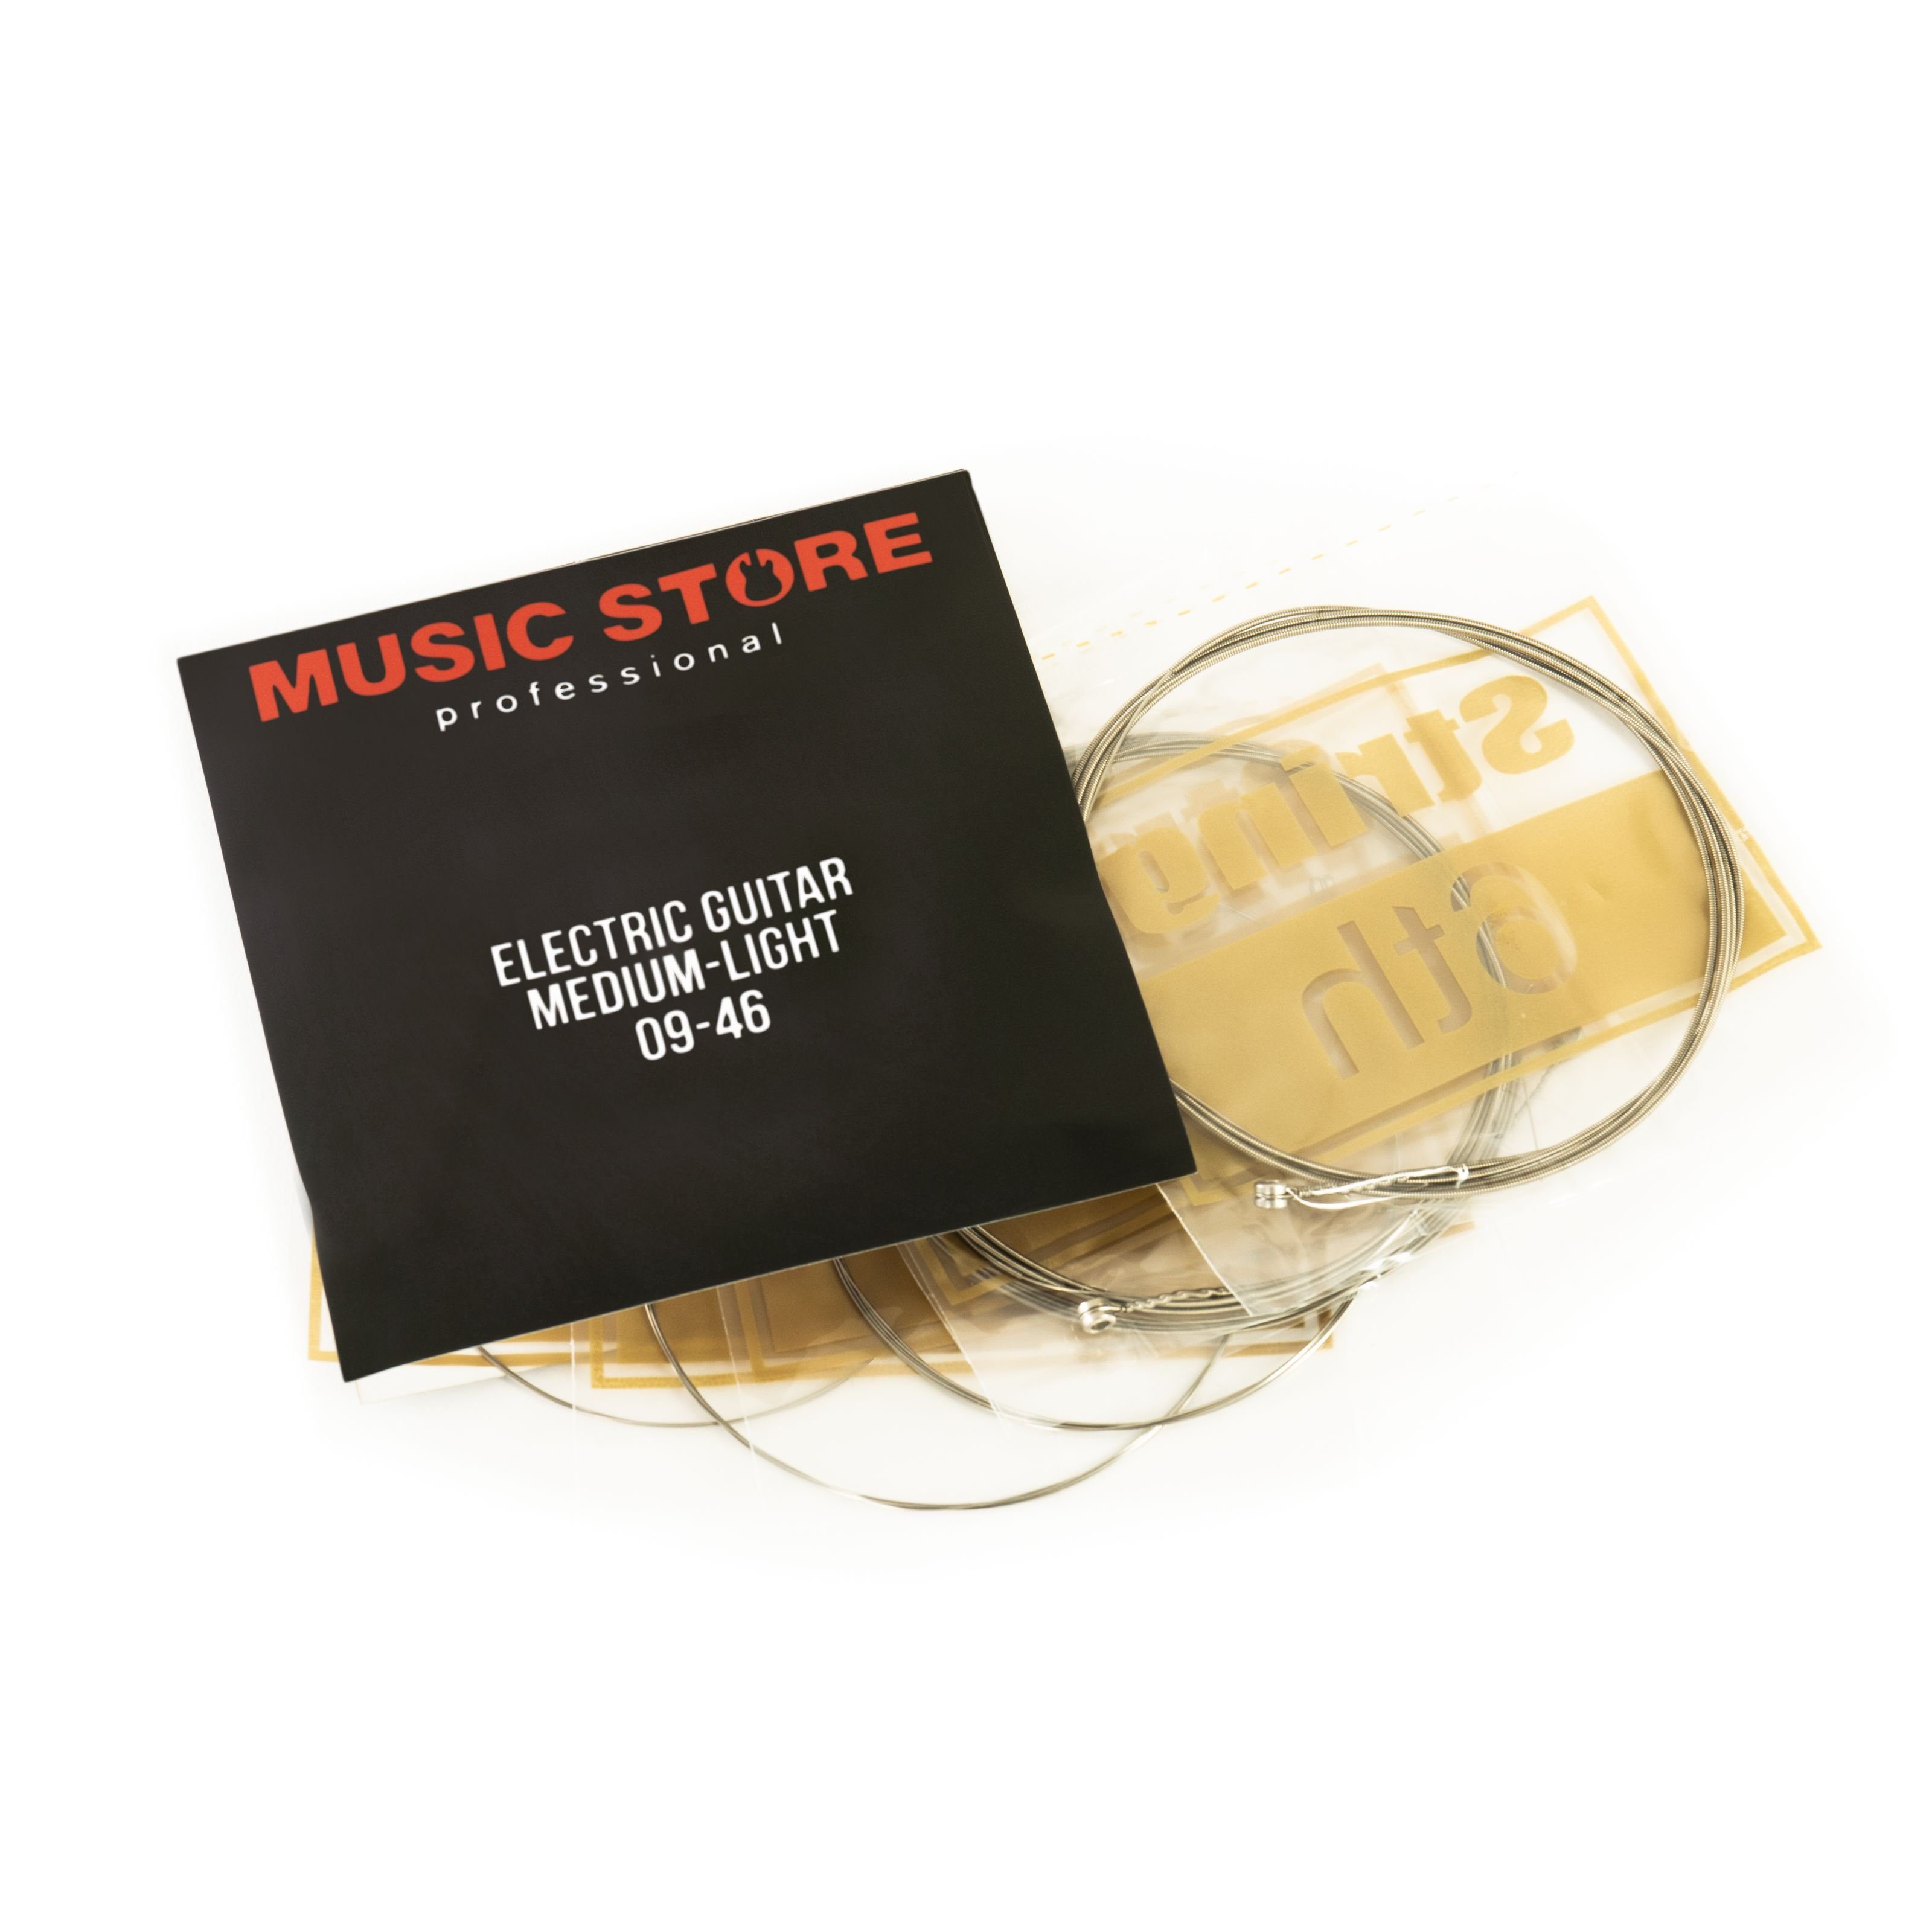 MUSIC STORE Saiten, (Electric Guitar Strings Medium-Light 09-46), Electric Guitar Strings, Medium-Light, 09-46